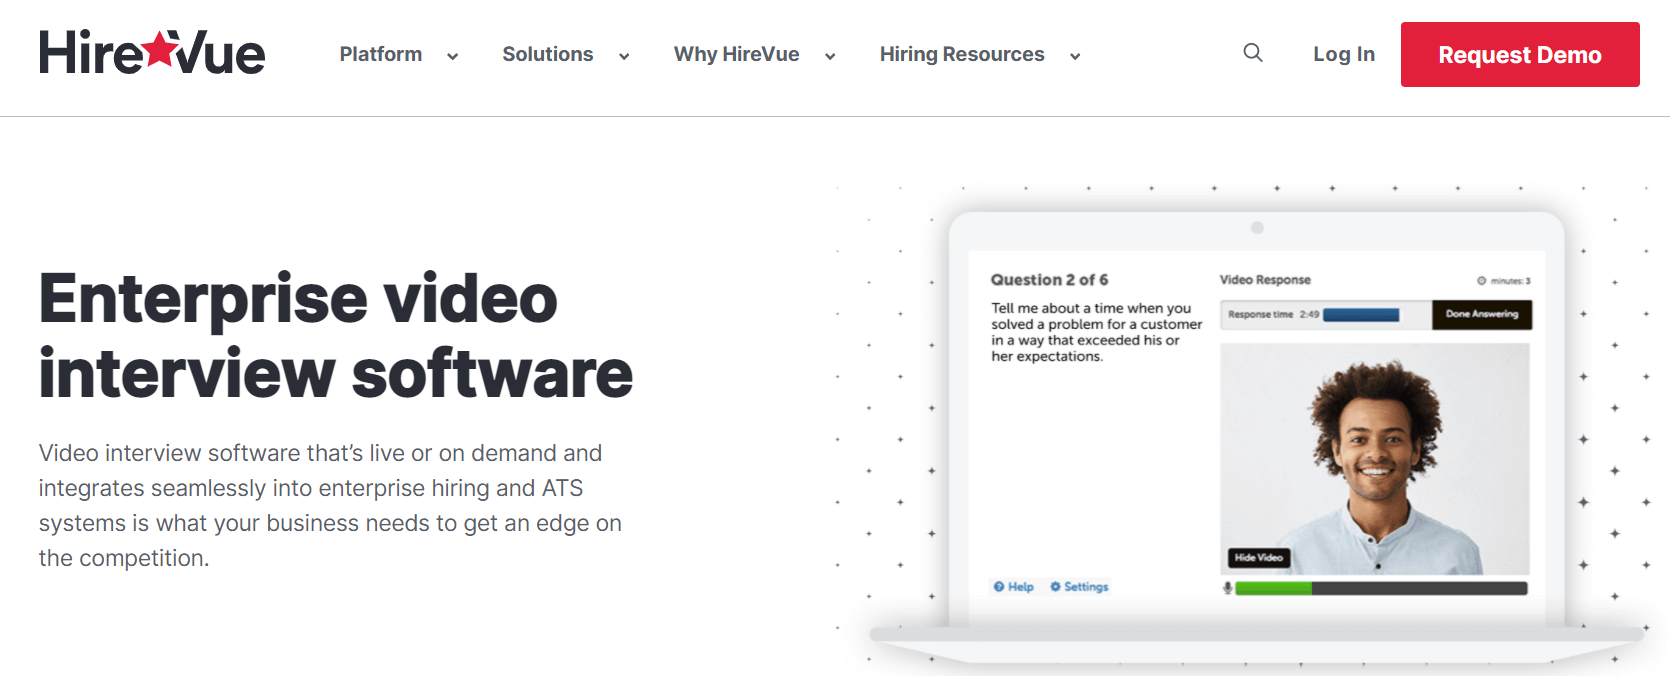 HireVue homepage: Enterprise video interview software